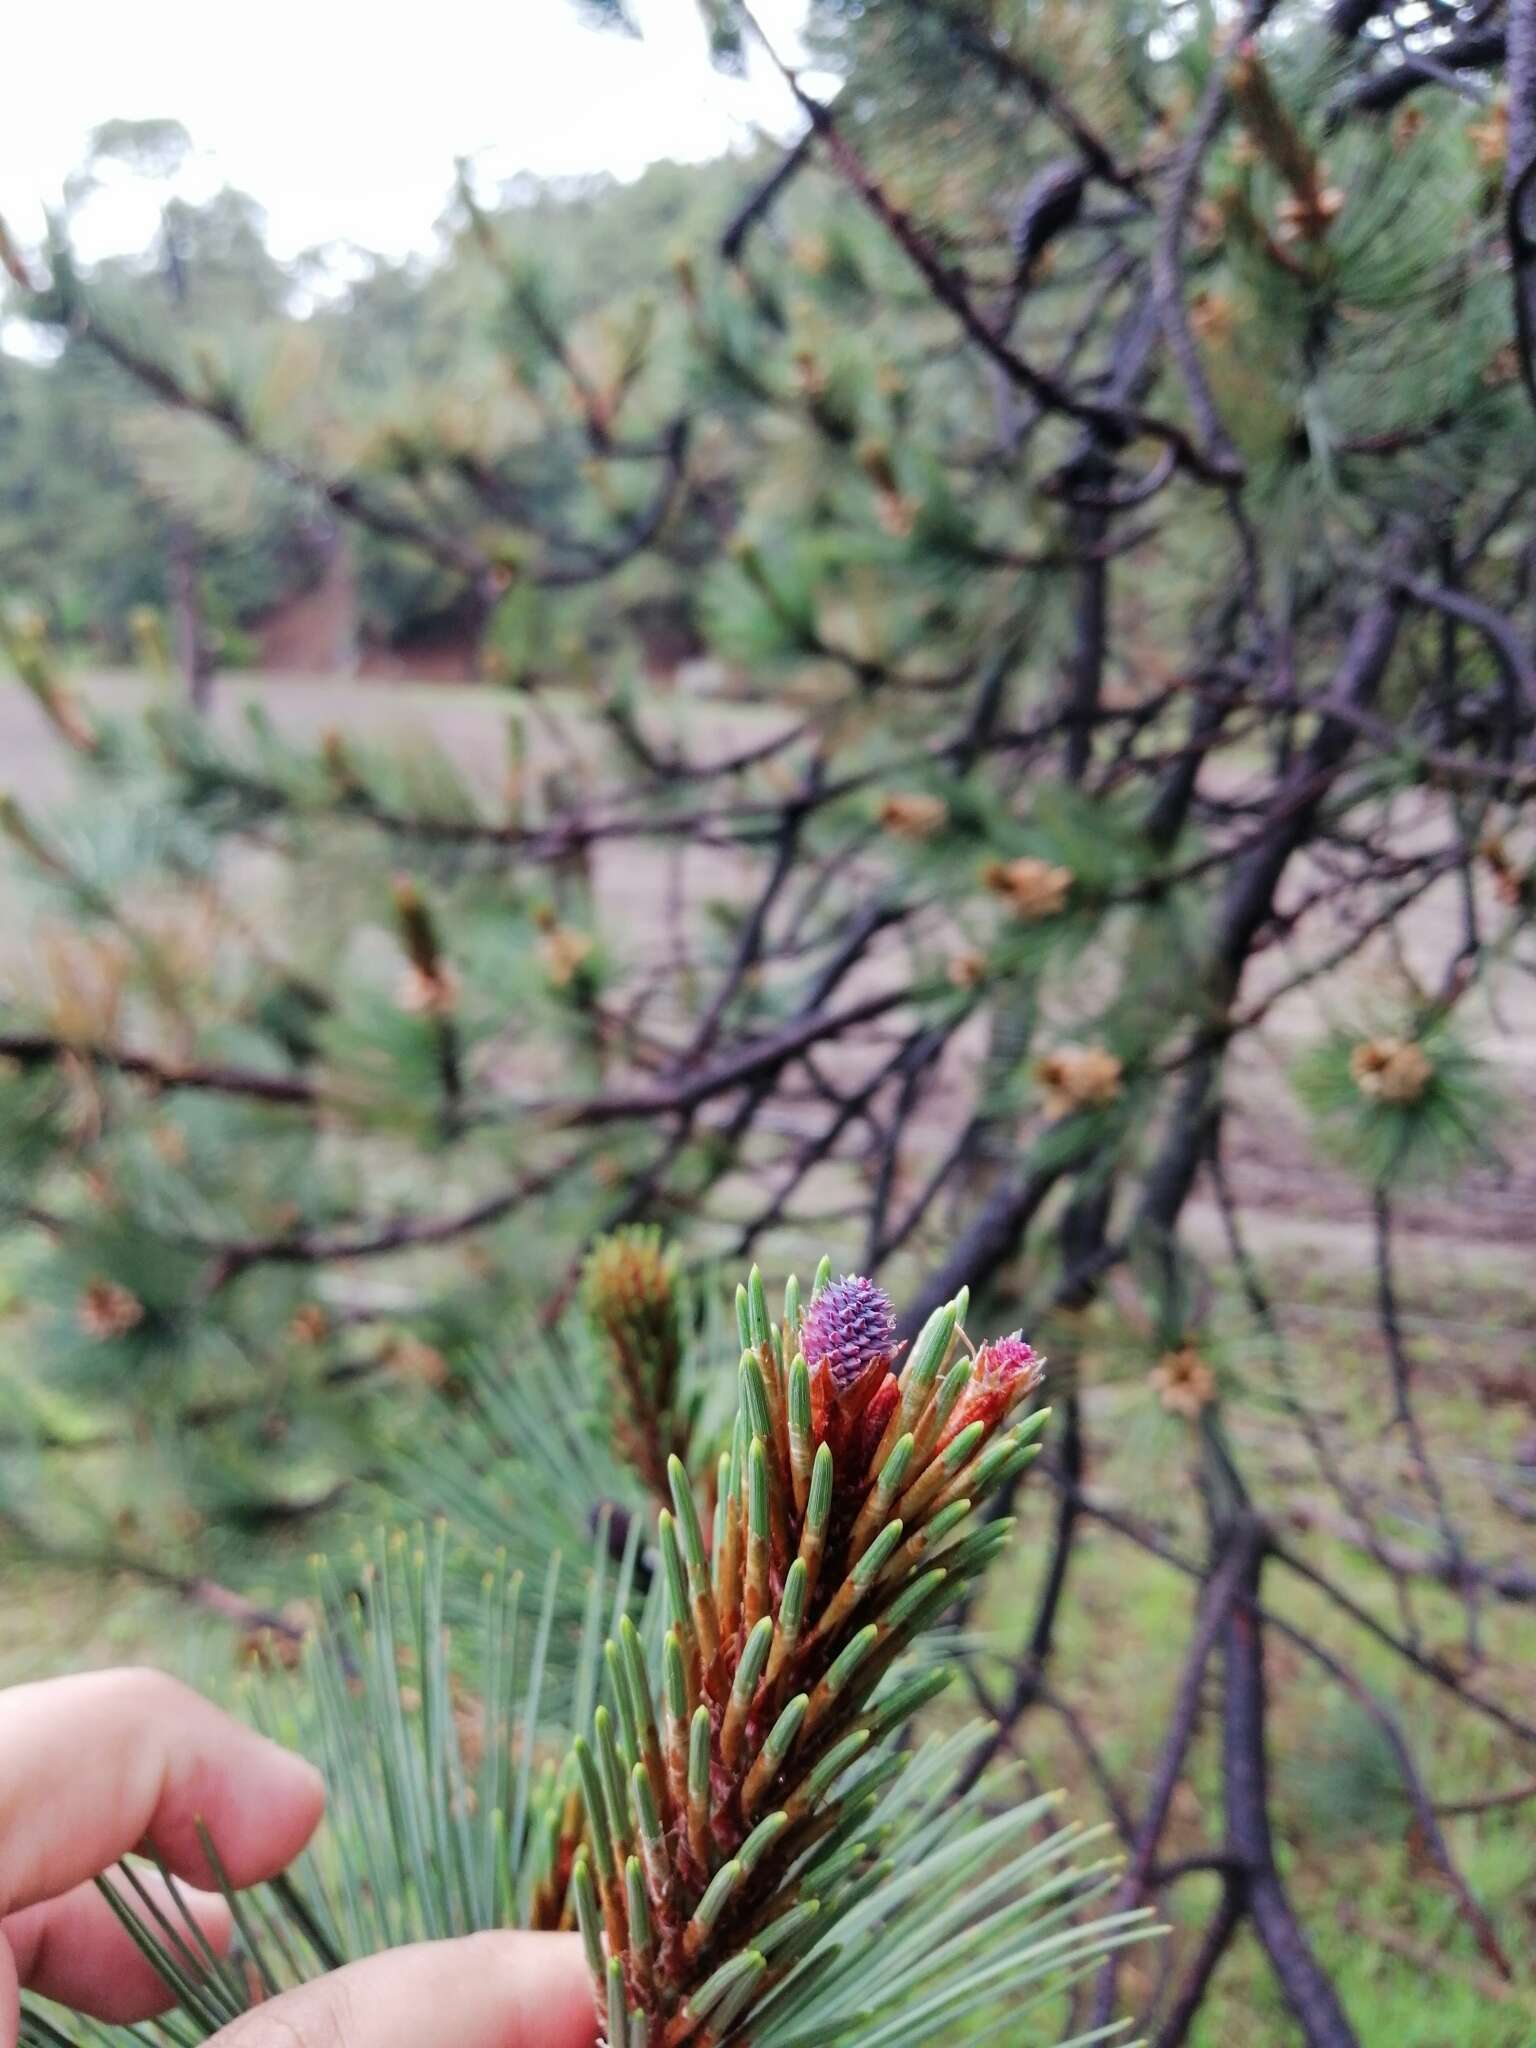 Image of Cooper's pine